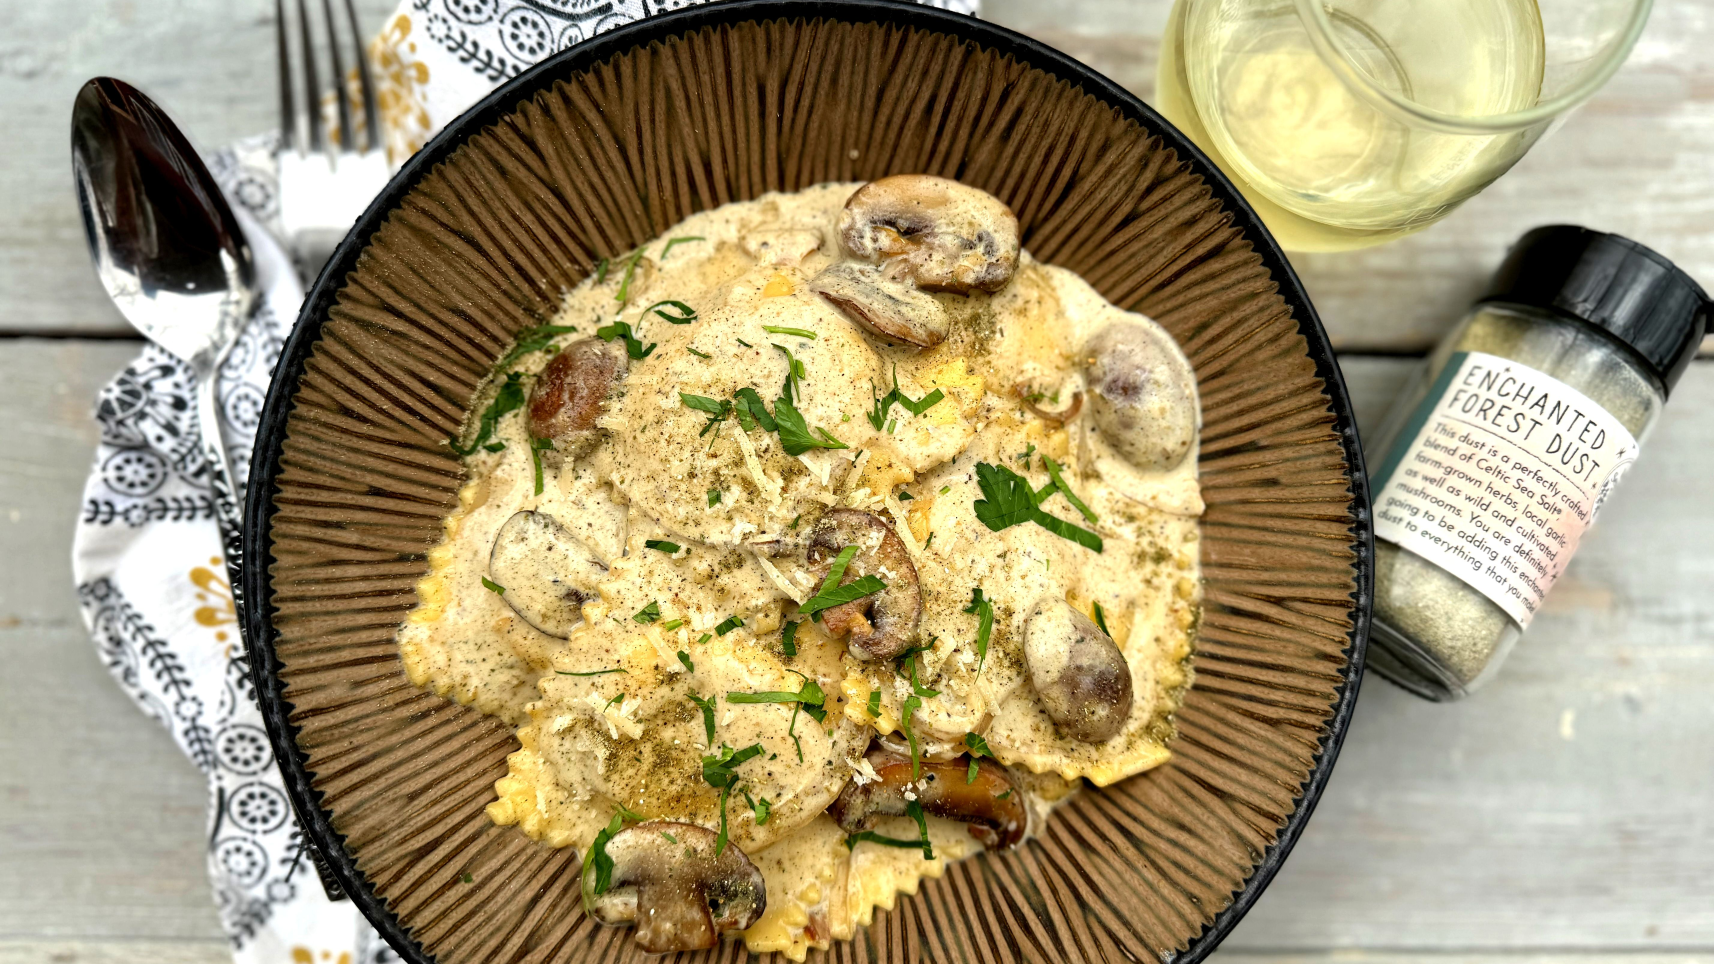 mushroom ravioli, fork, spoon, napkin, enchanted forest dust, brown bowl